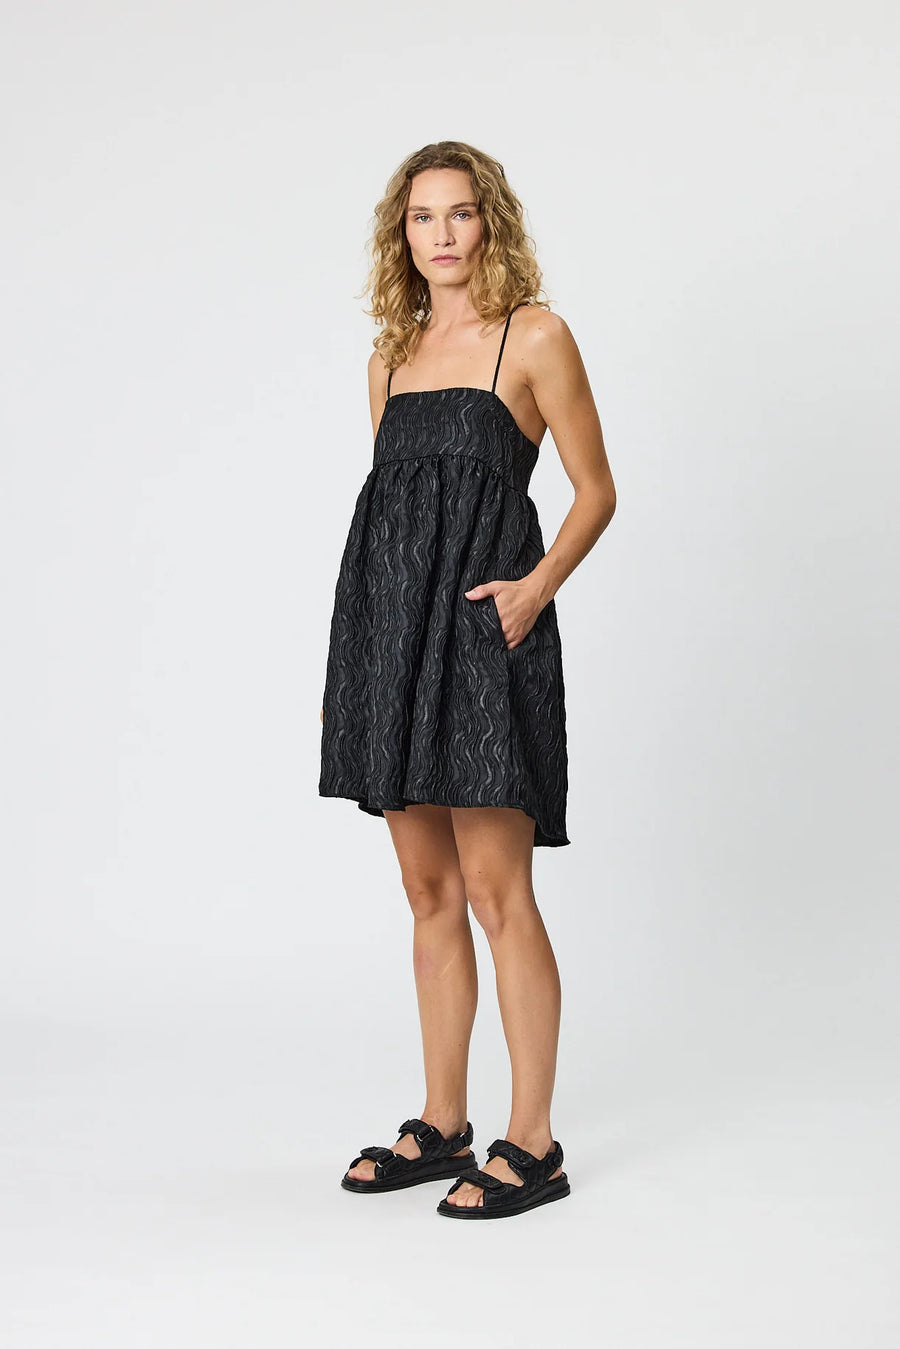 Remain | Sydney Mini Dress - Black